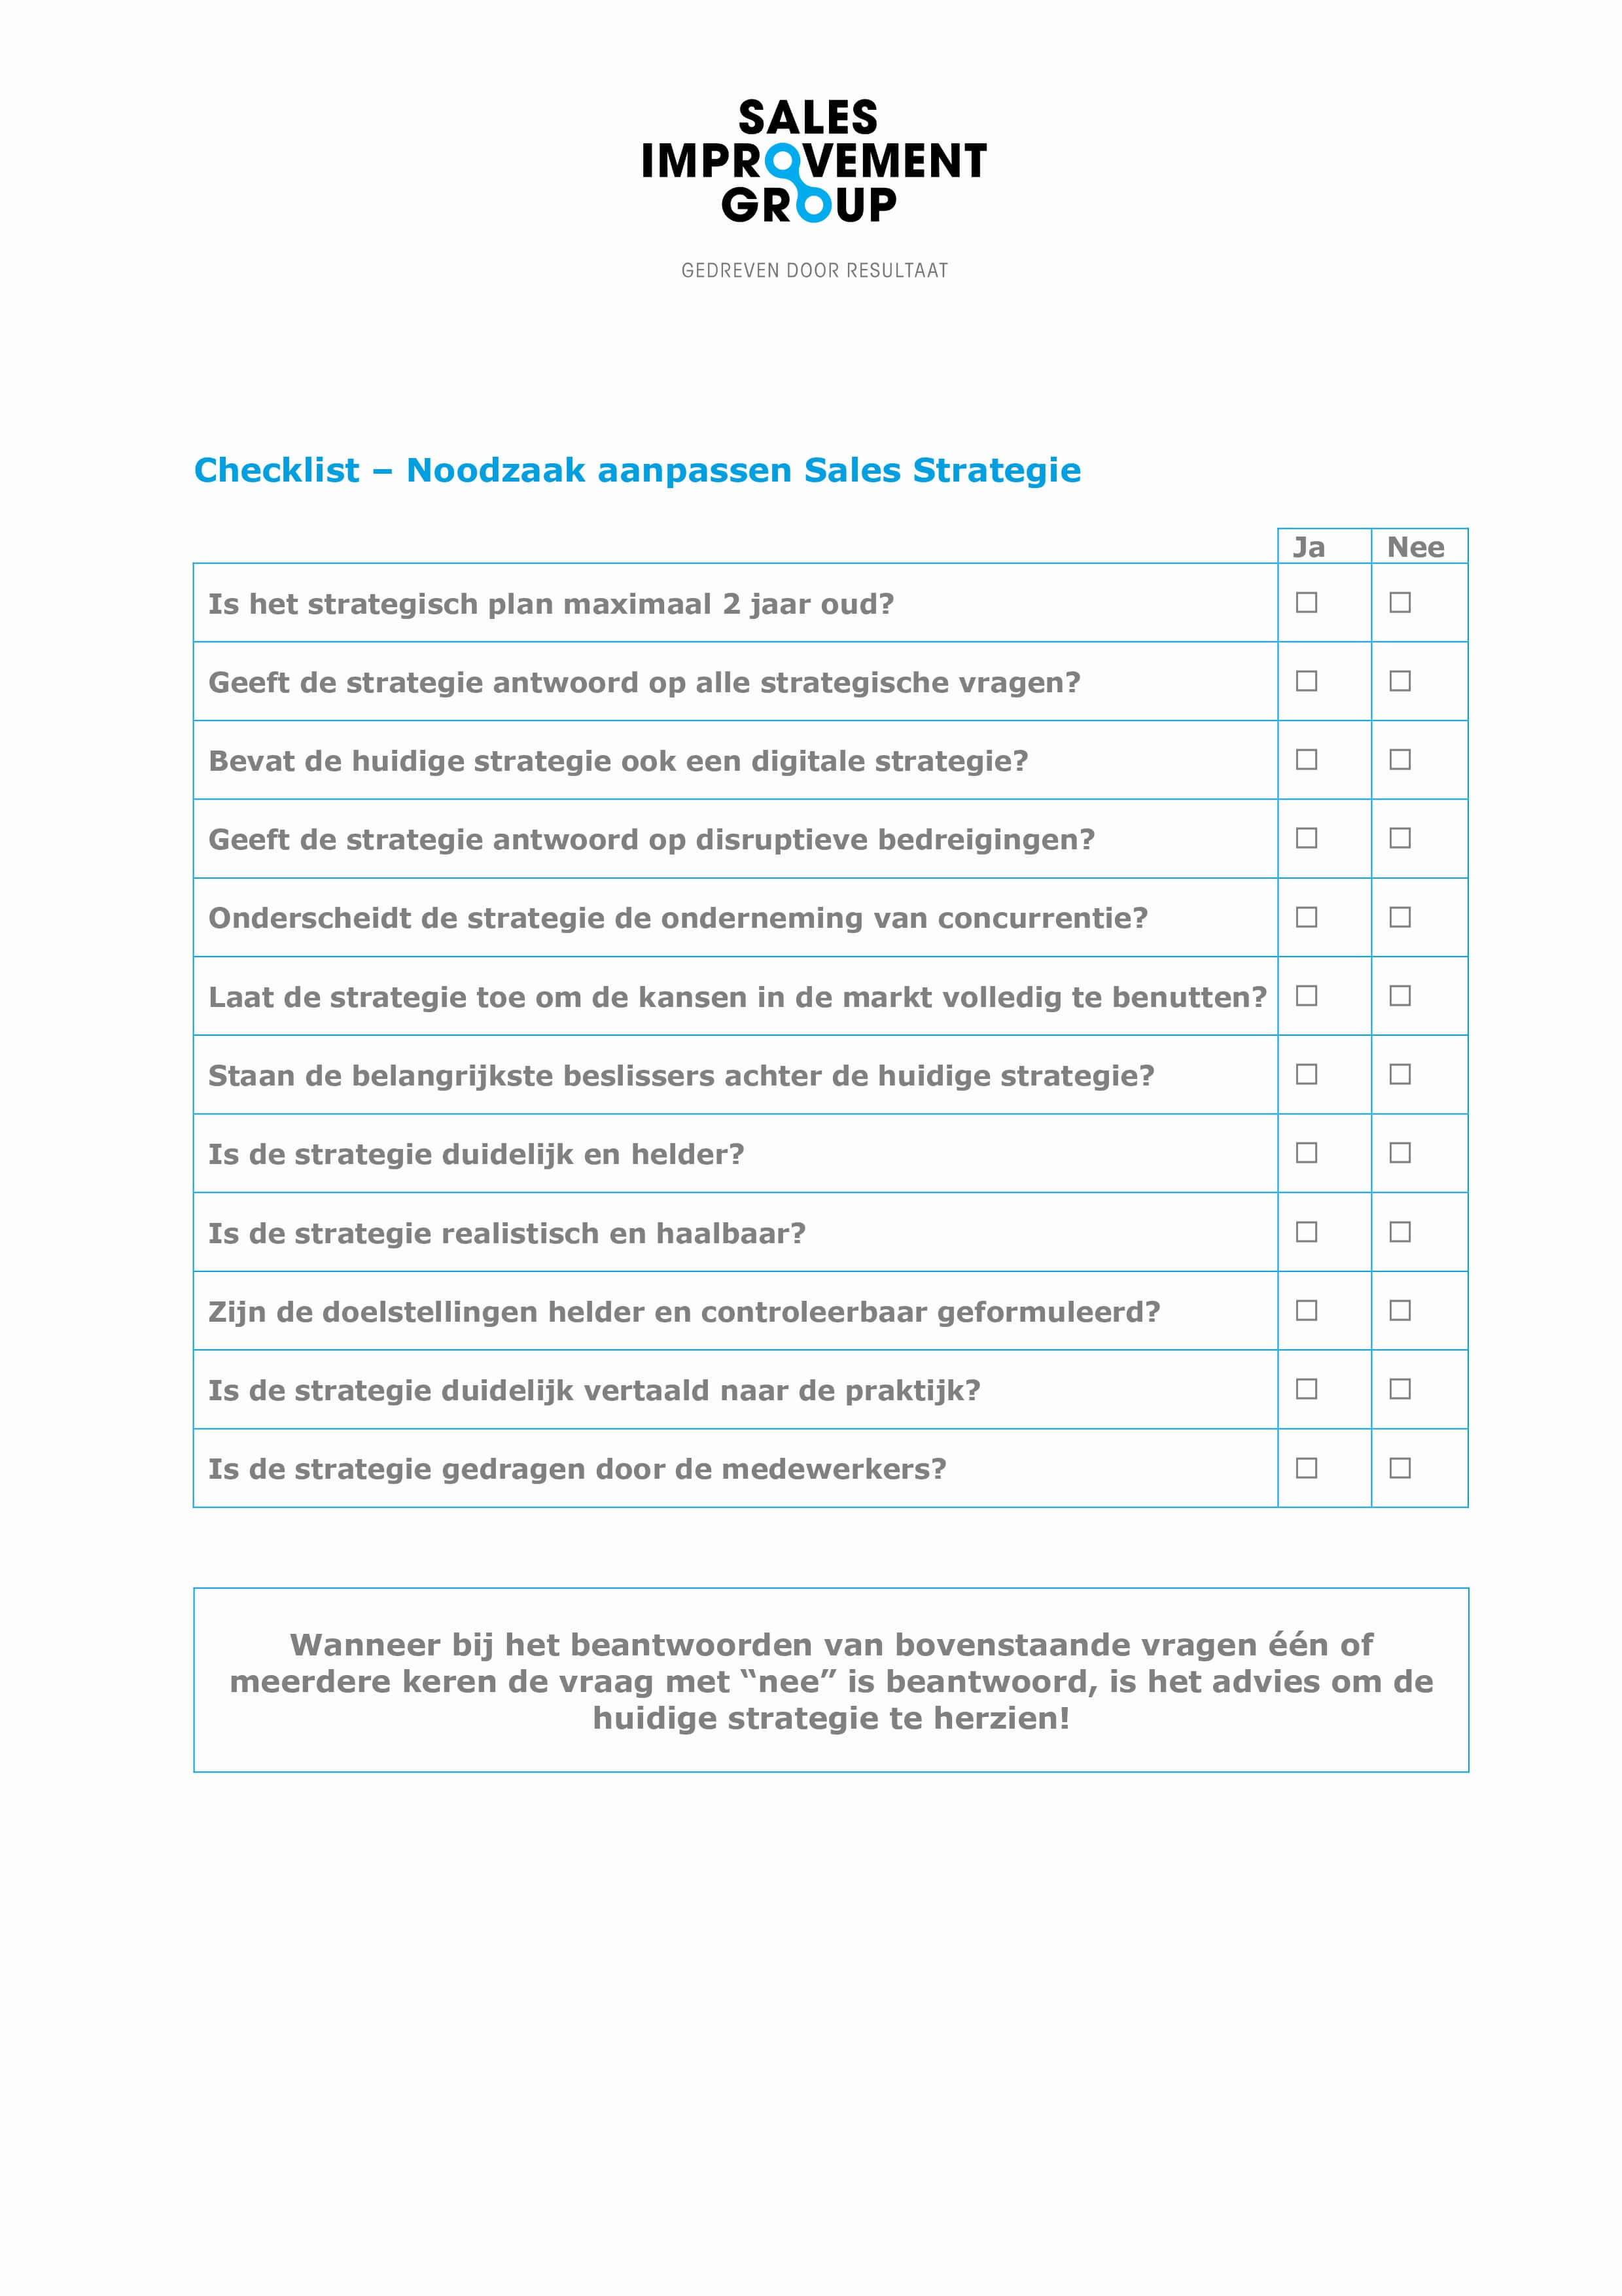 Checklist noodzaak aanpassing sales strategie